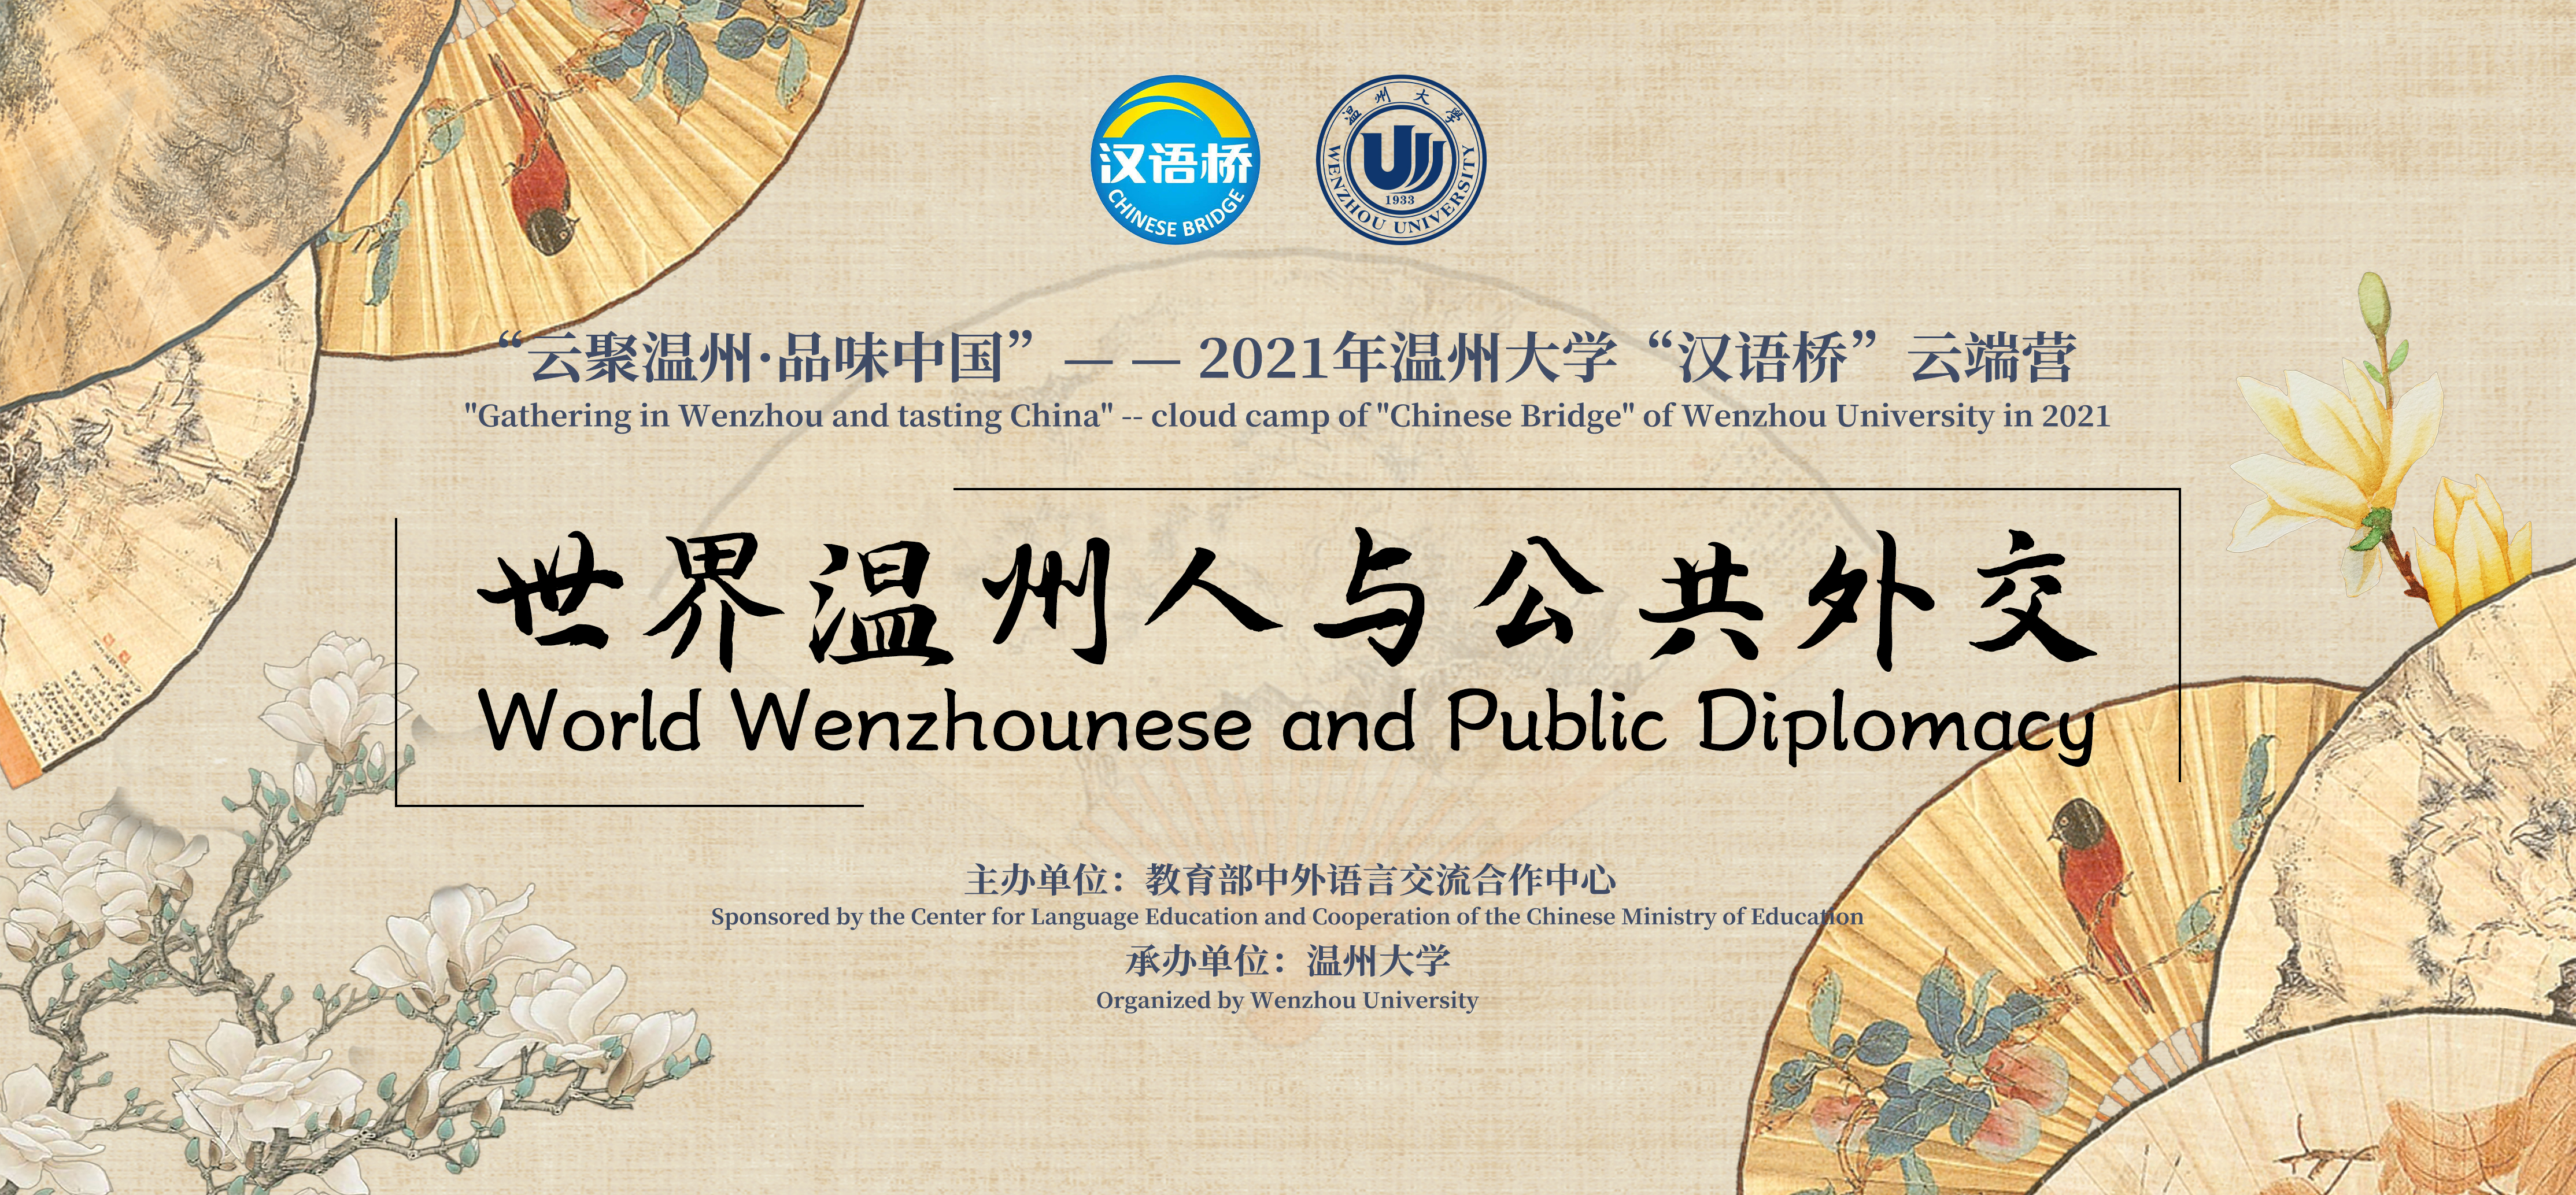 World Wenzhounese and Public Diplomacy